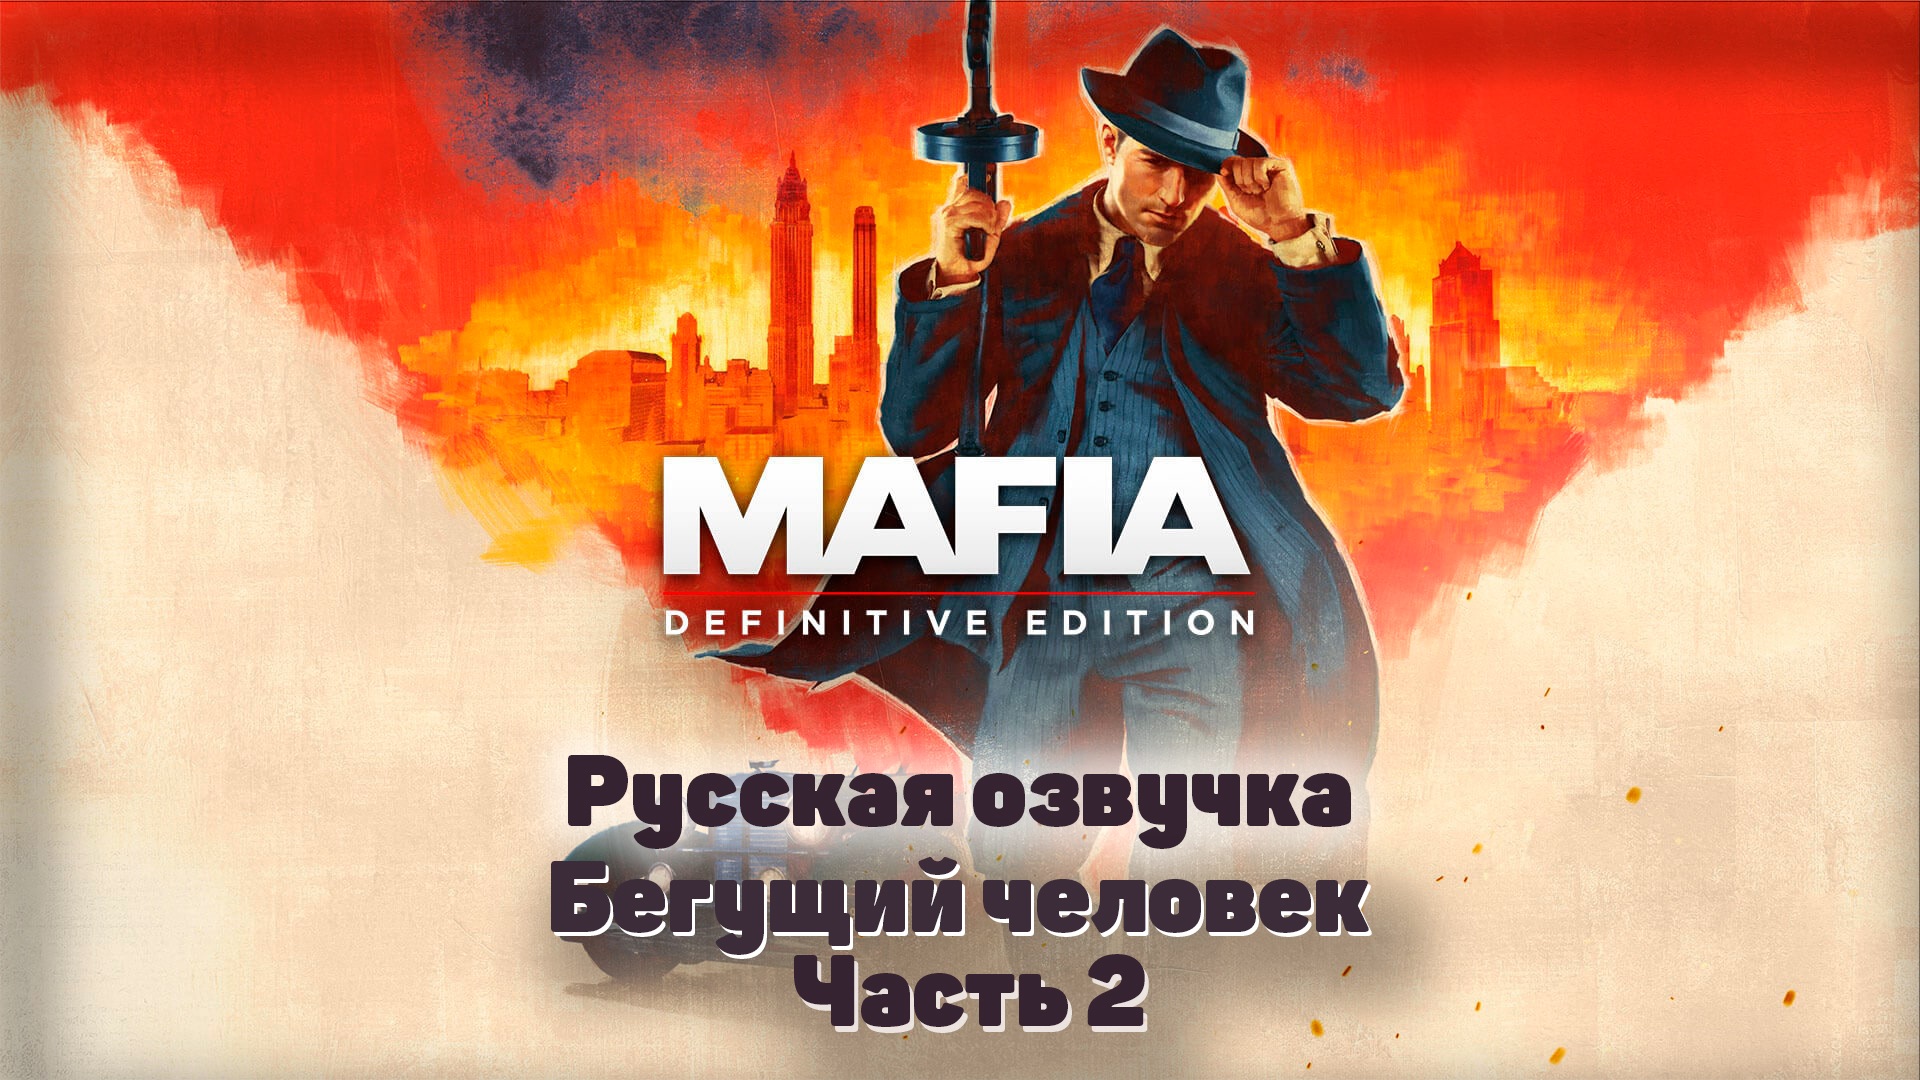 Mafia: Definitive Edition  Часть 2 Бегущий человек  #Mafia #Tommy #TheCityOfLostHeaven